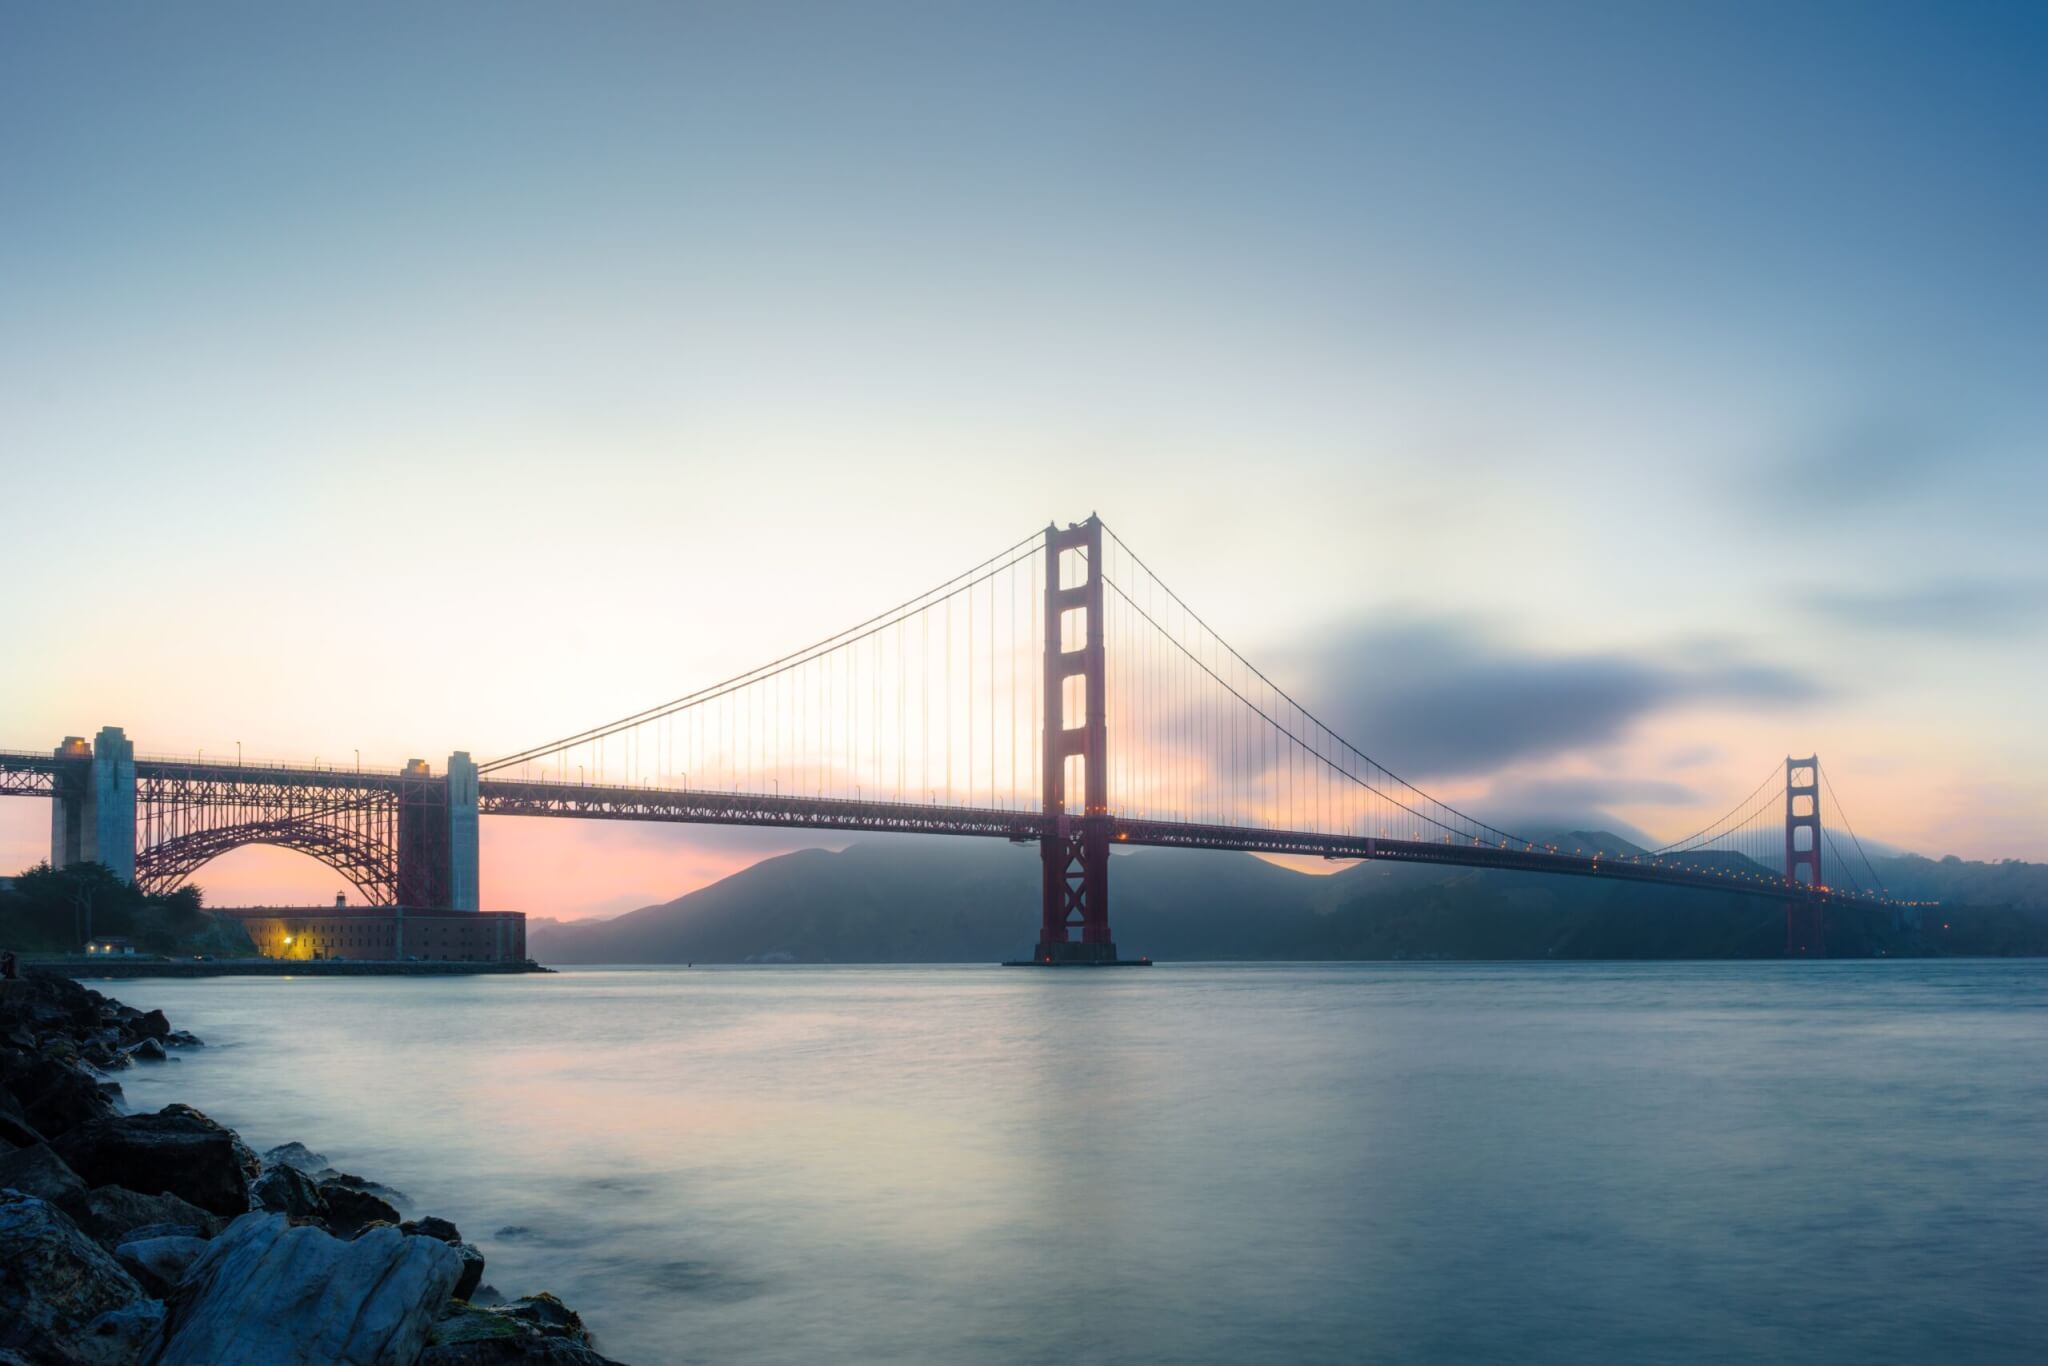 Sunset at the Golden Gate Bridge